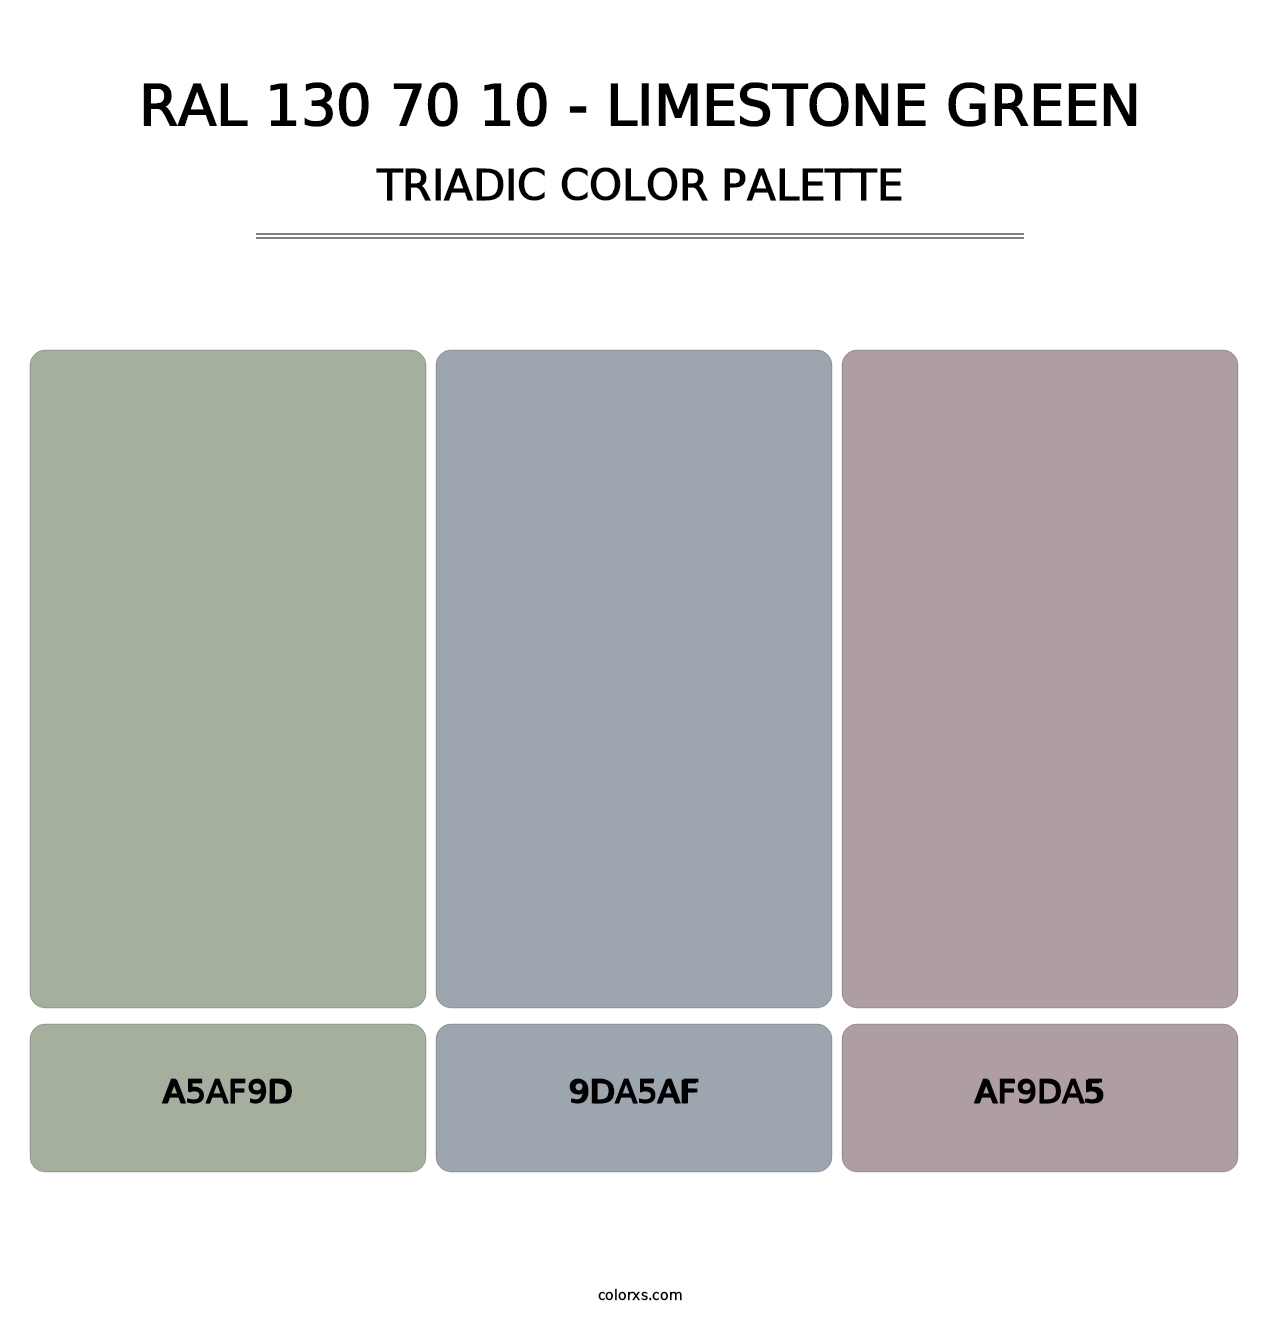 RAL 130 70 10 - Limestone Green - Triadic Color Palette